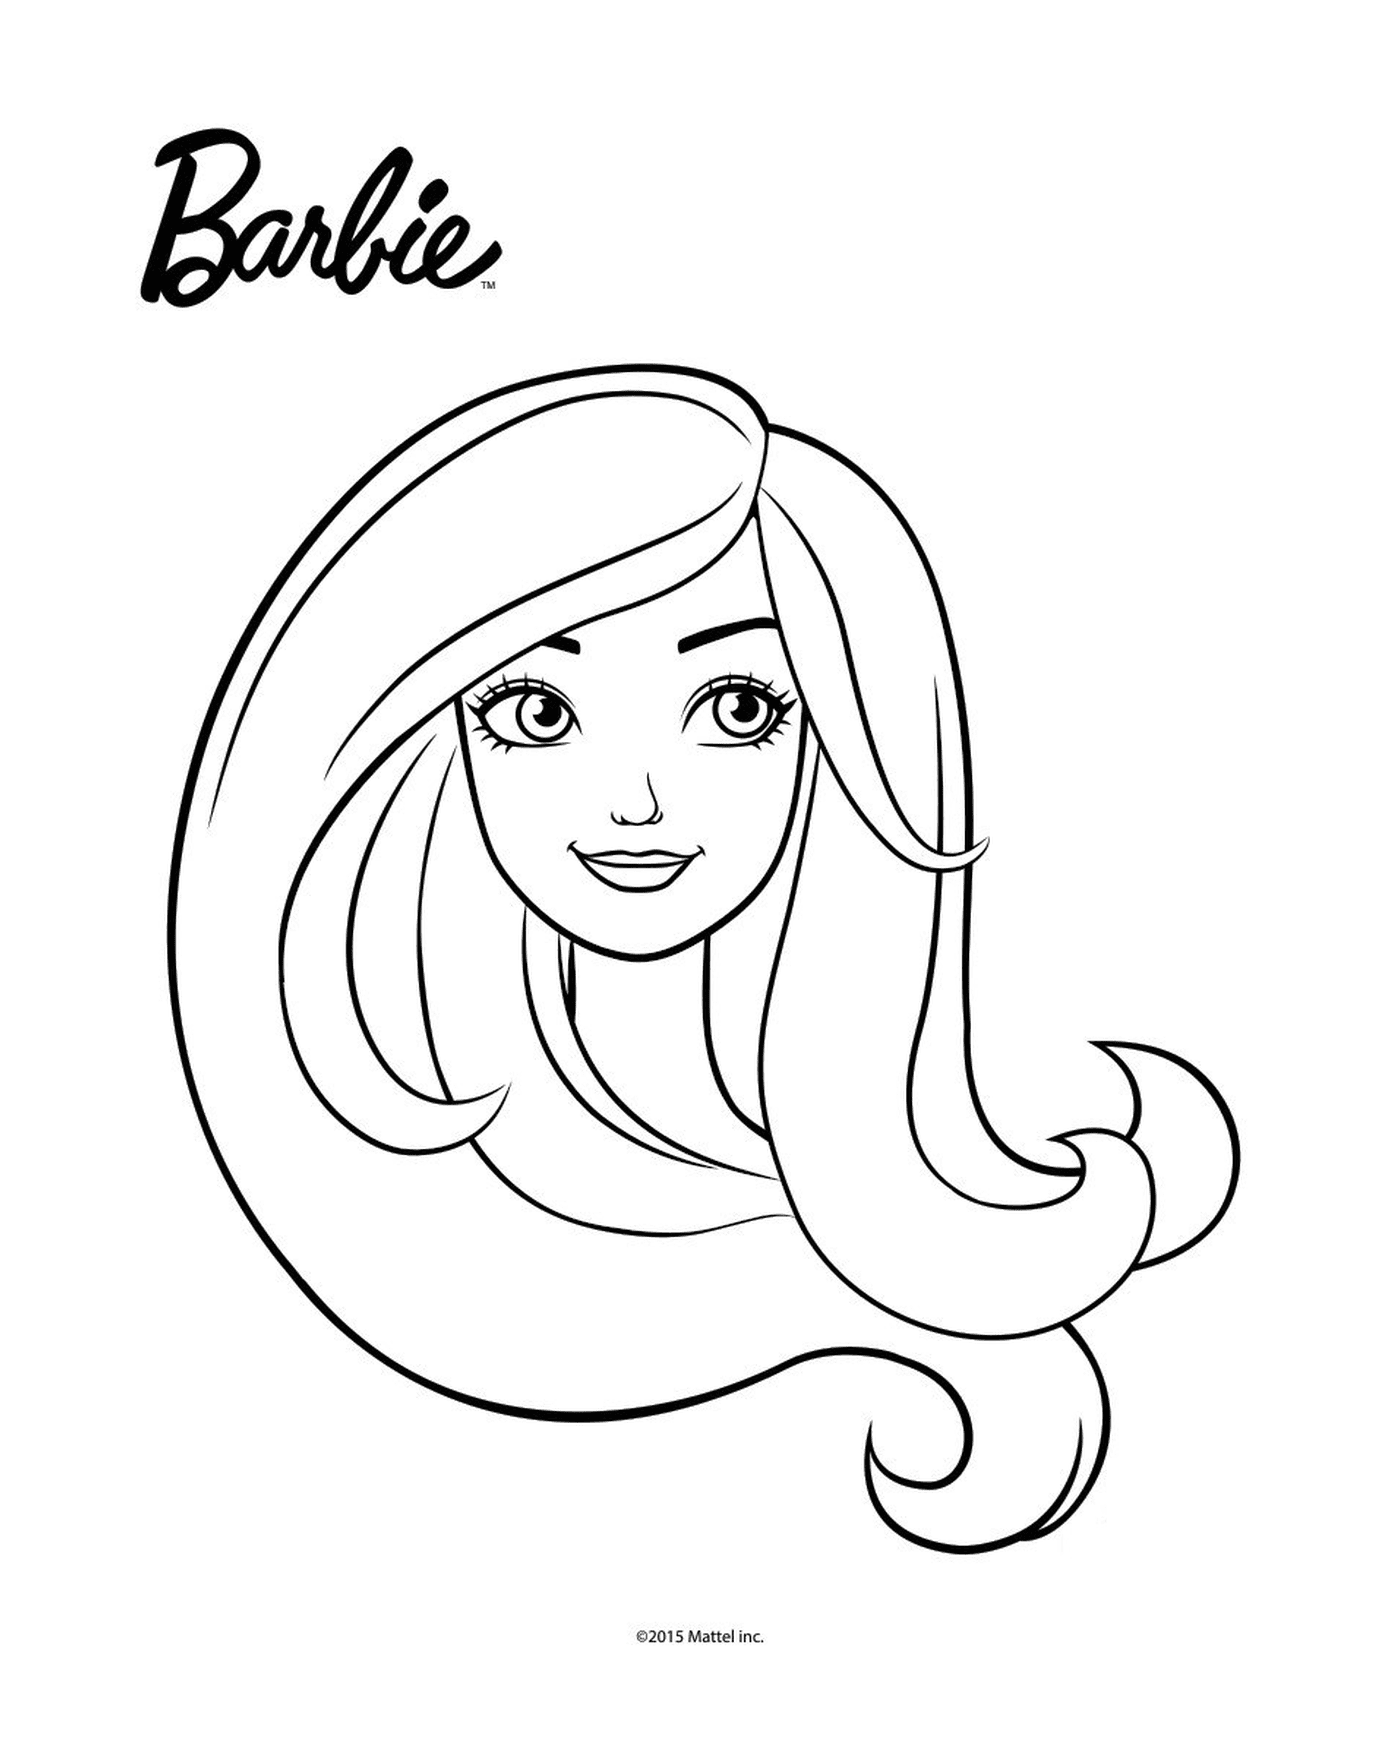  La cara de Barbie 